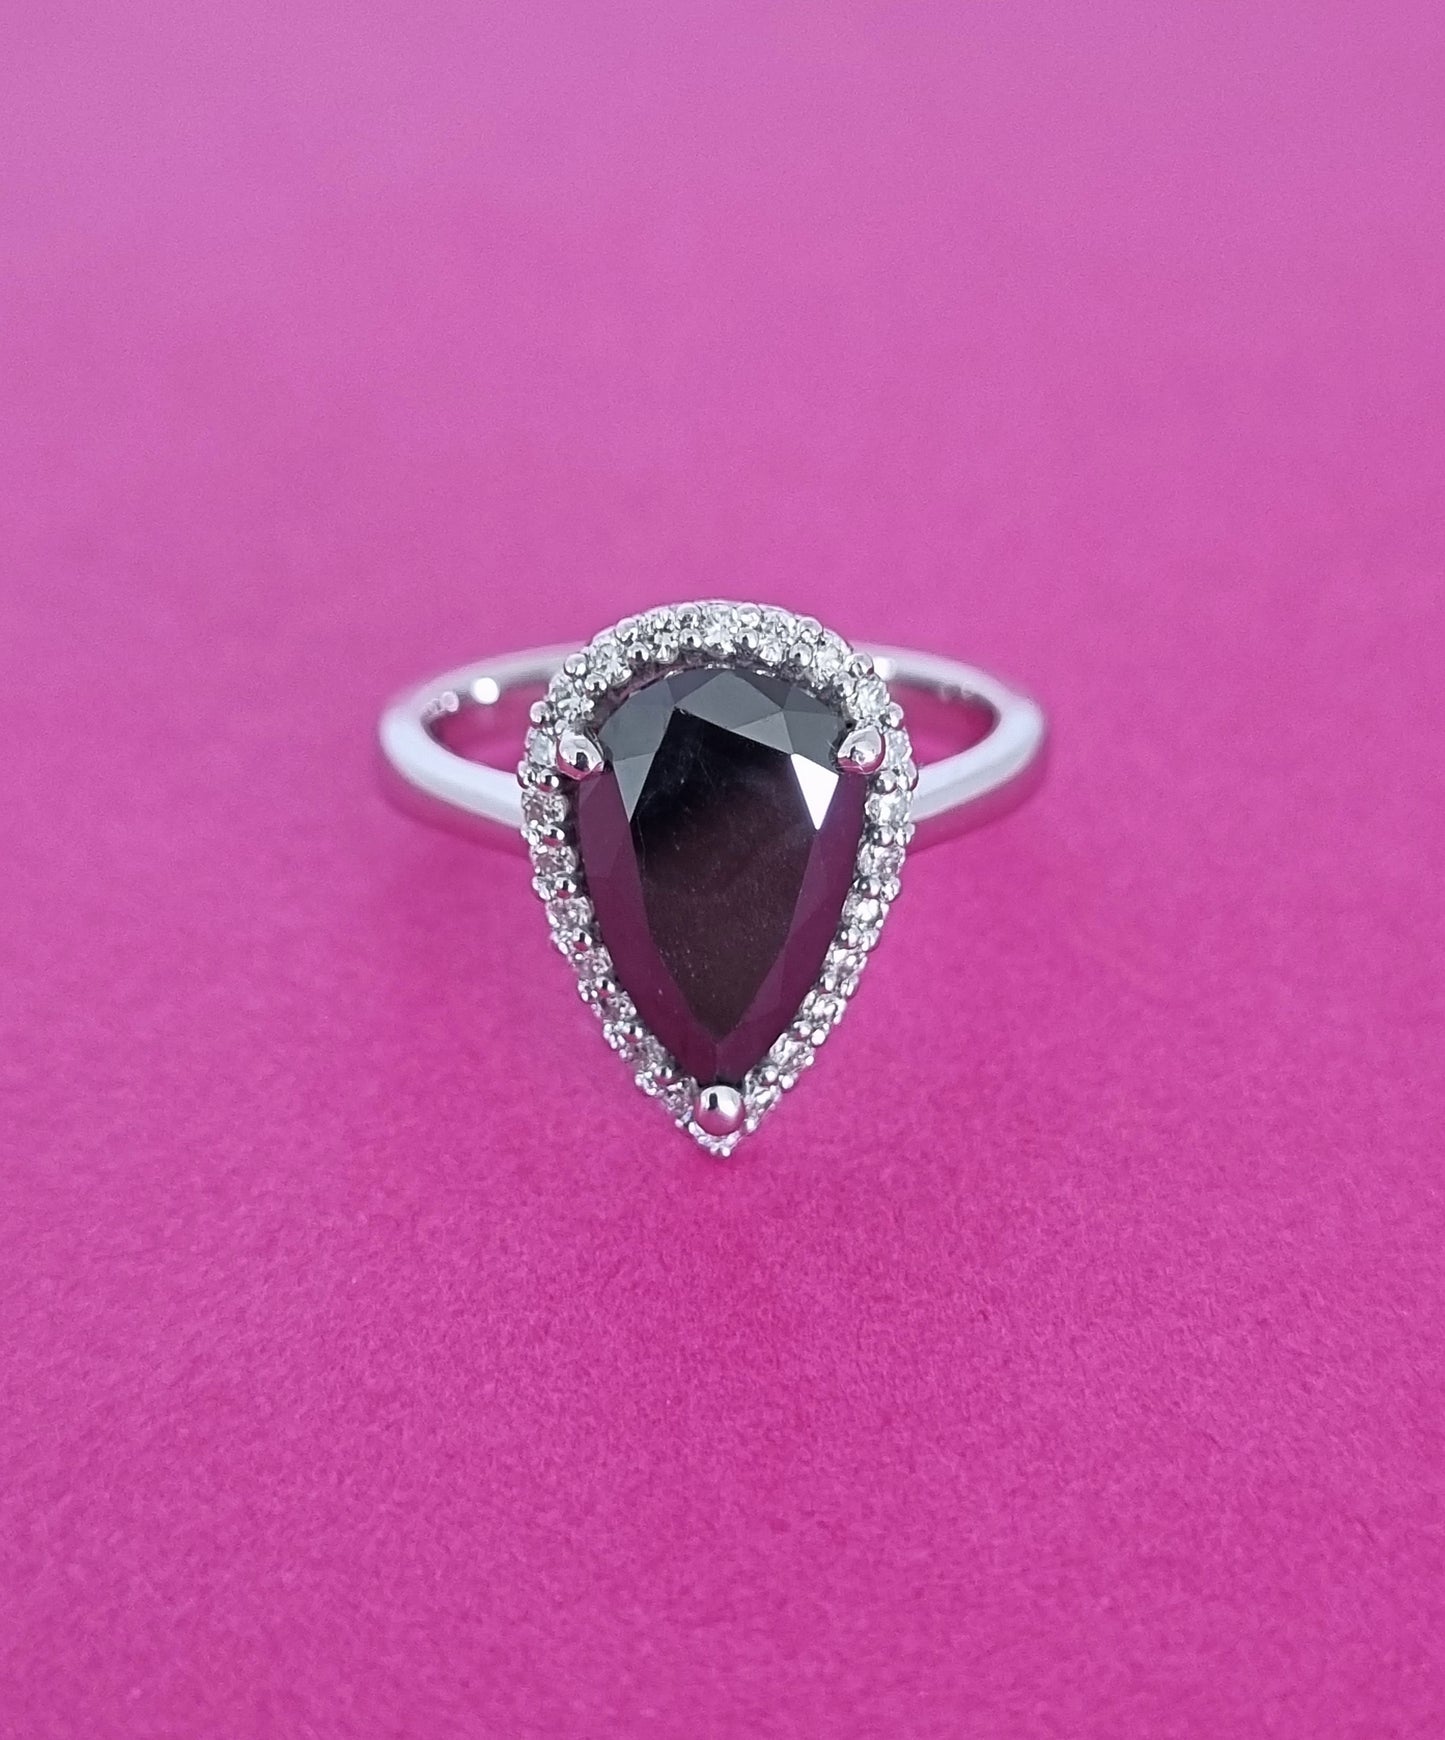 Pear Cut 2.48 Carat Black Diamond Ring